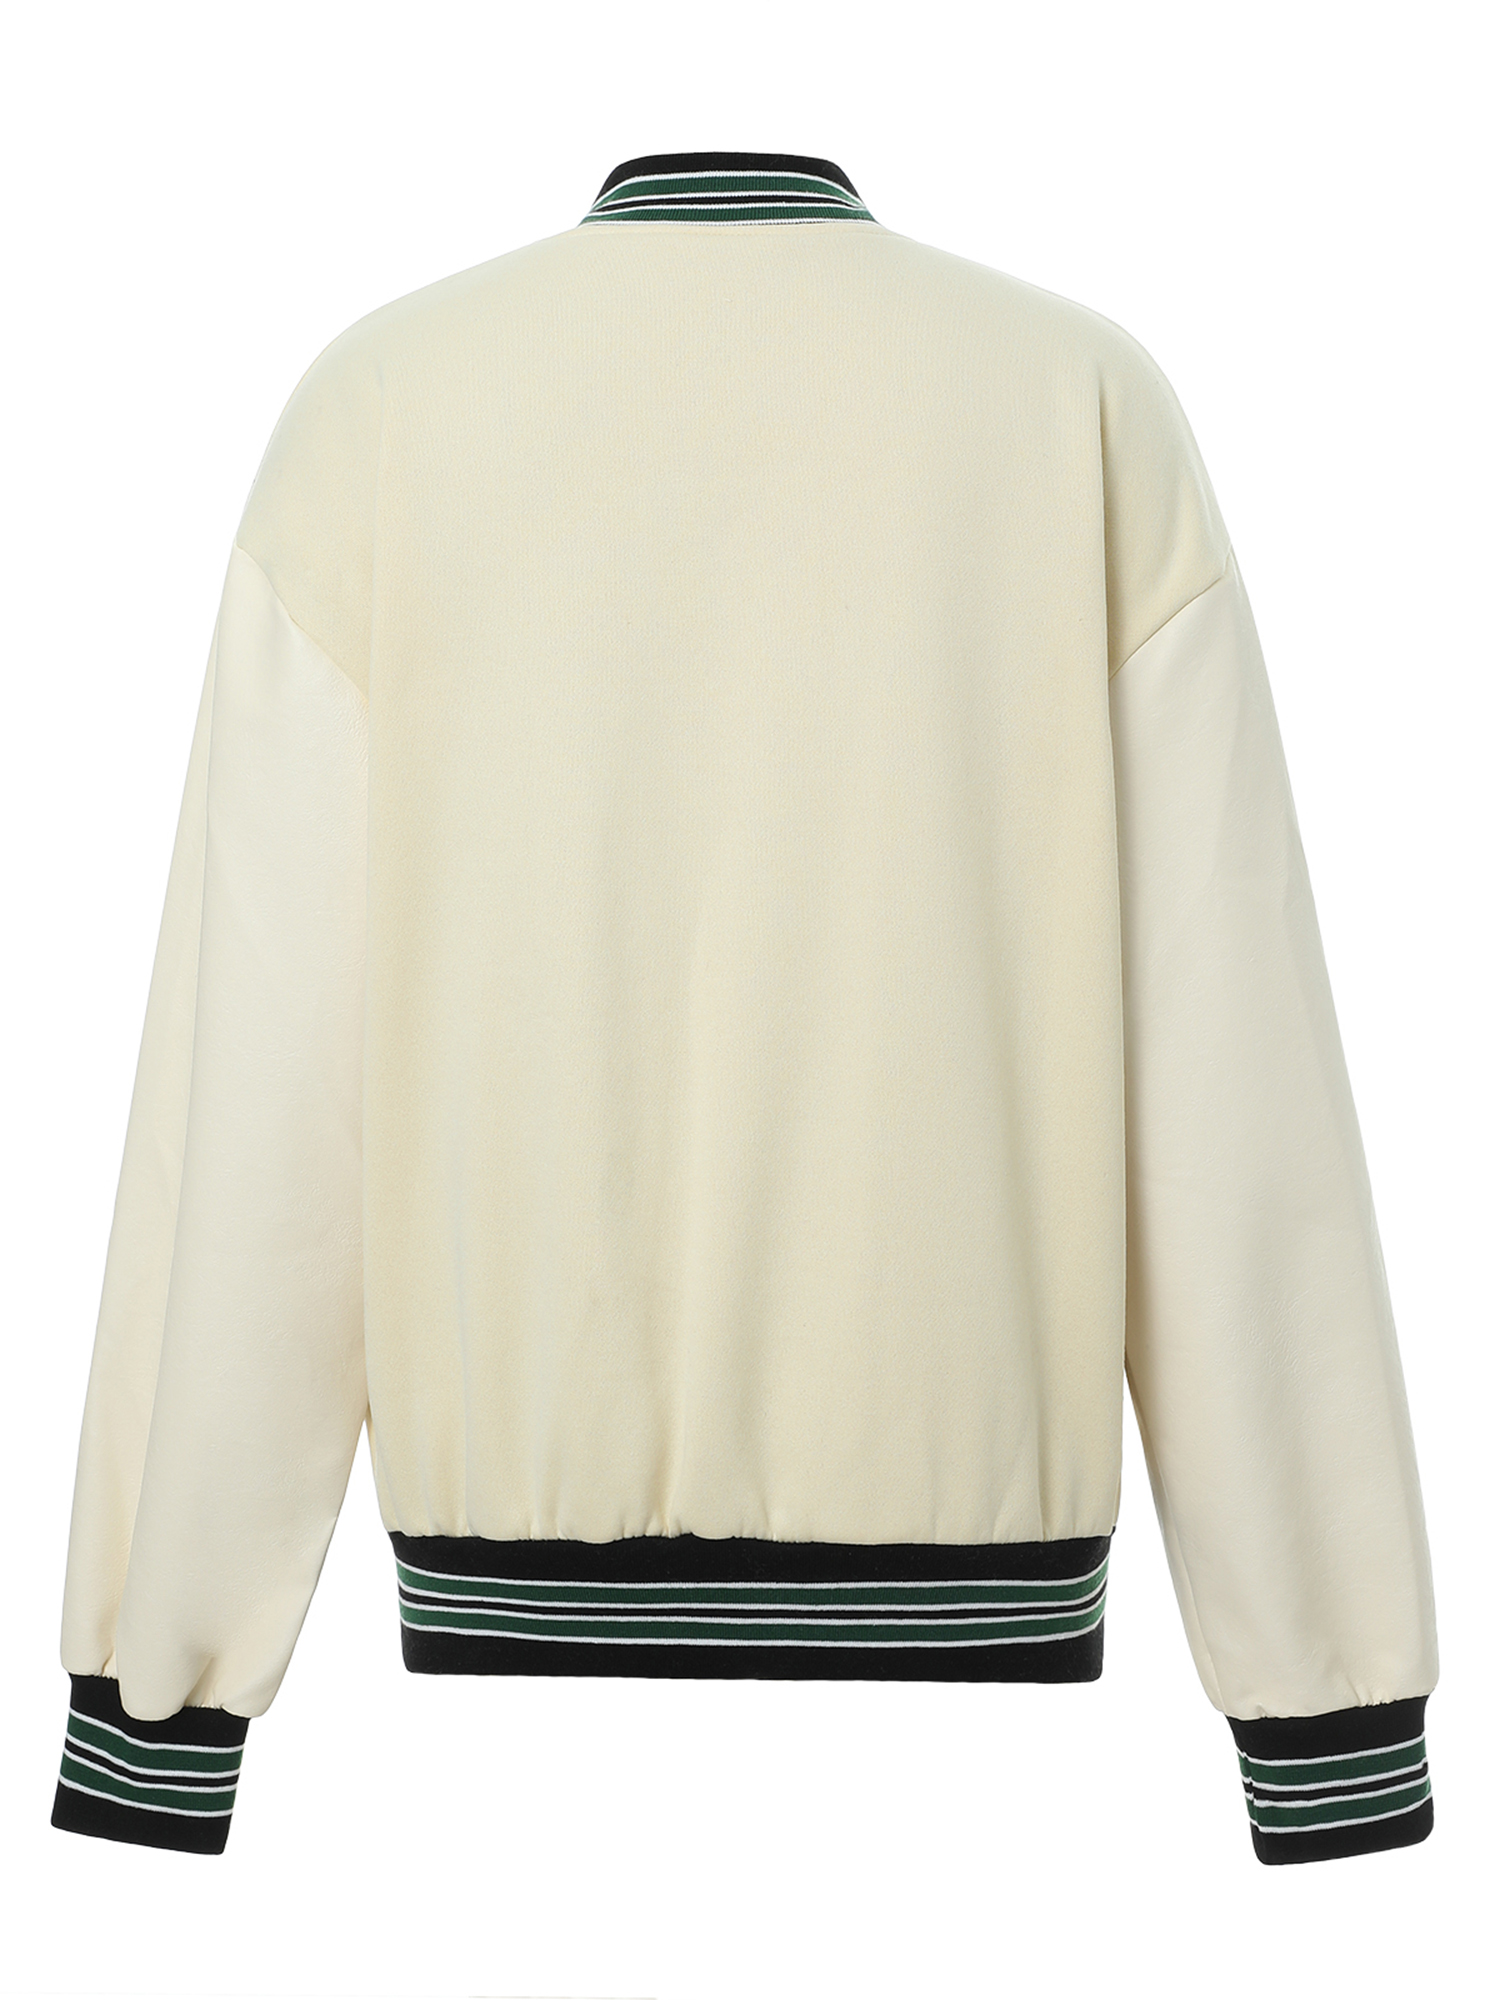 wybzd Women Y2k Oversized Bomber Jacket Button Down PU Baseball Coat  Harajuku Vintage Fall Varsity Jacket Outwear Brown Green S 